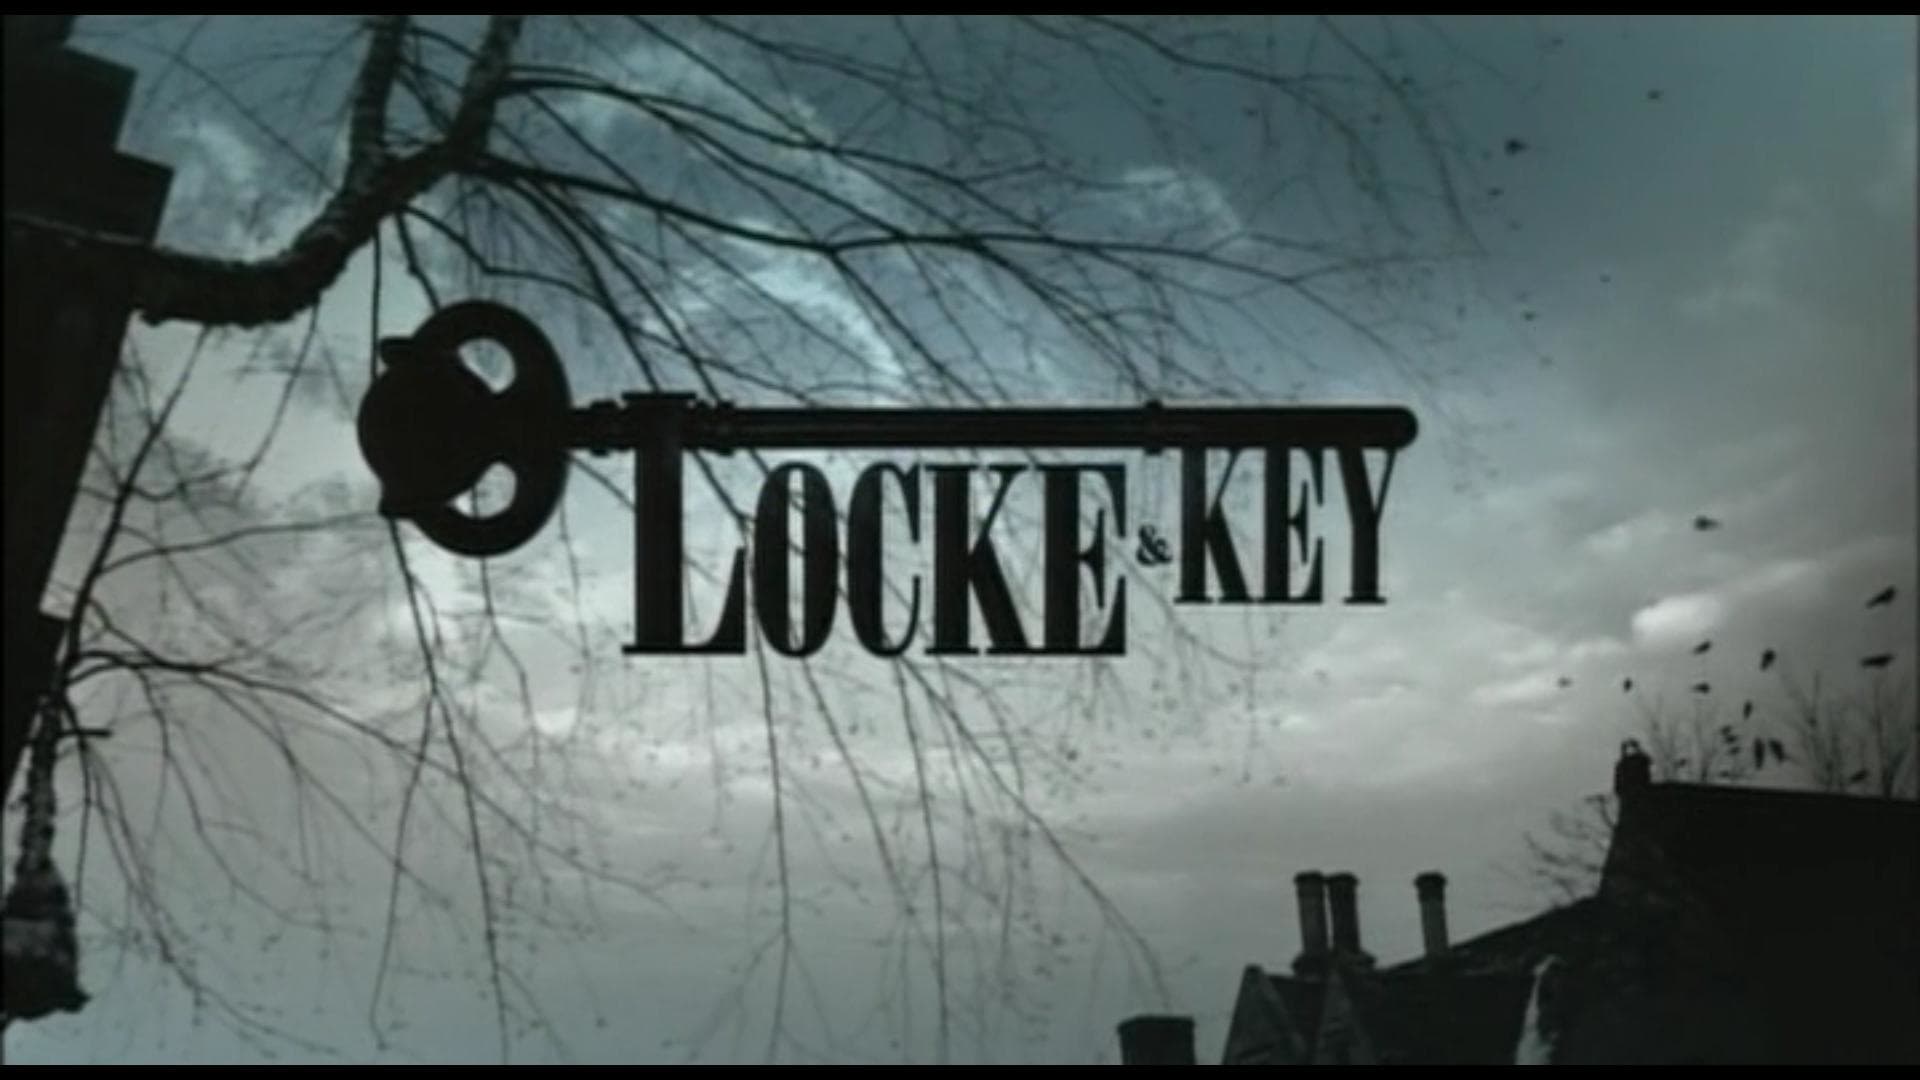 locke and key